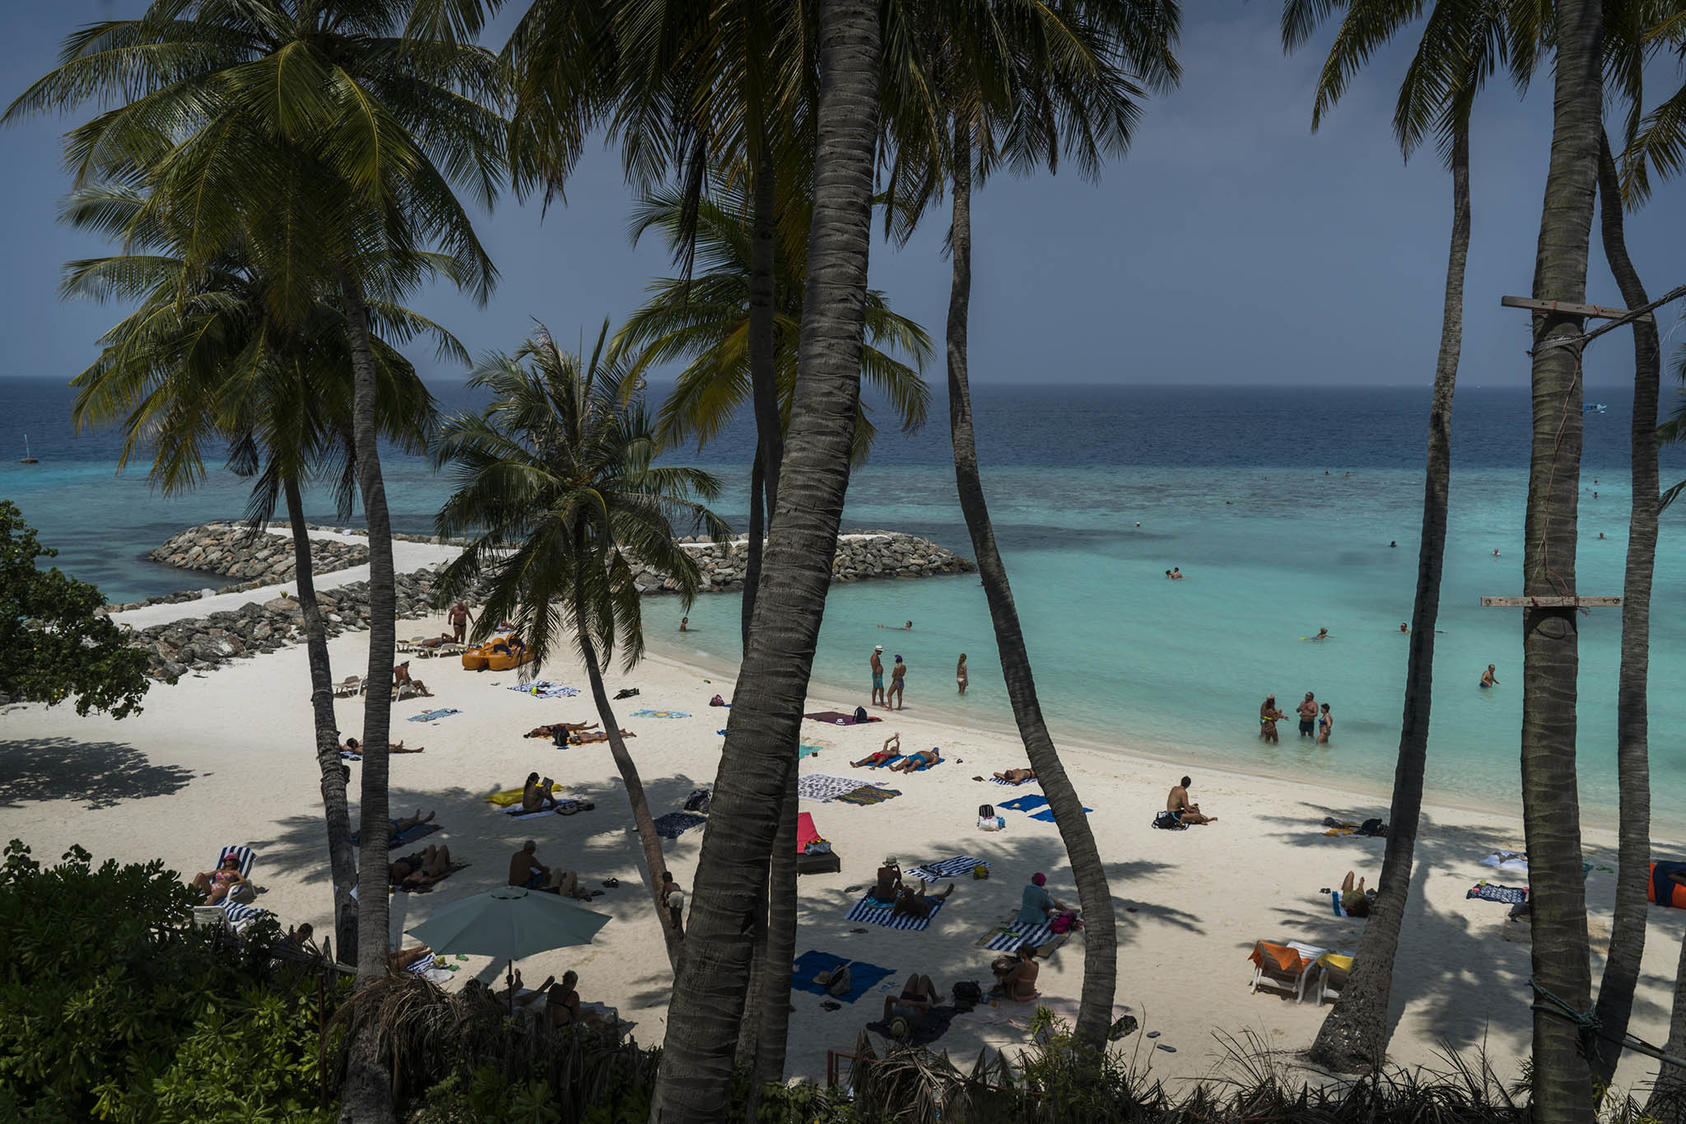 A public beach on the island of Maafushi in the Maldives, Feb. 11, 2017. (Adam Dean/The New York Times)